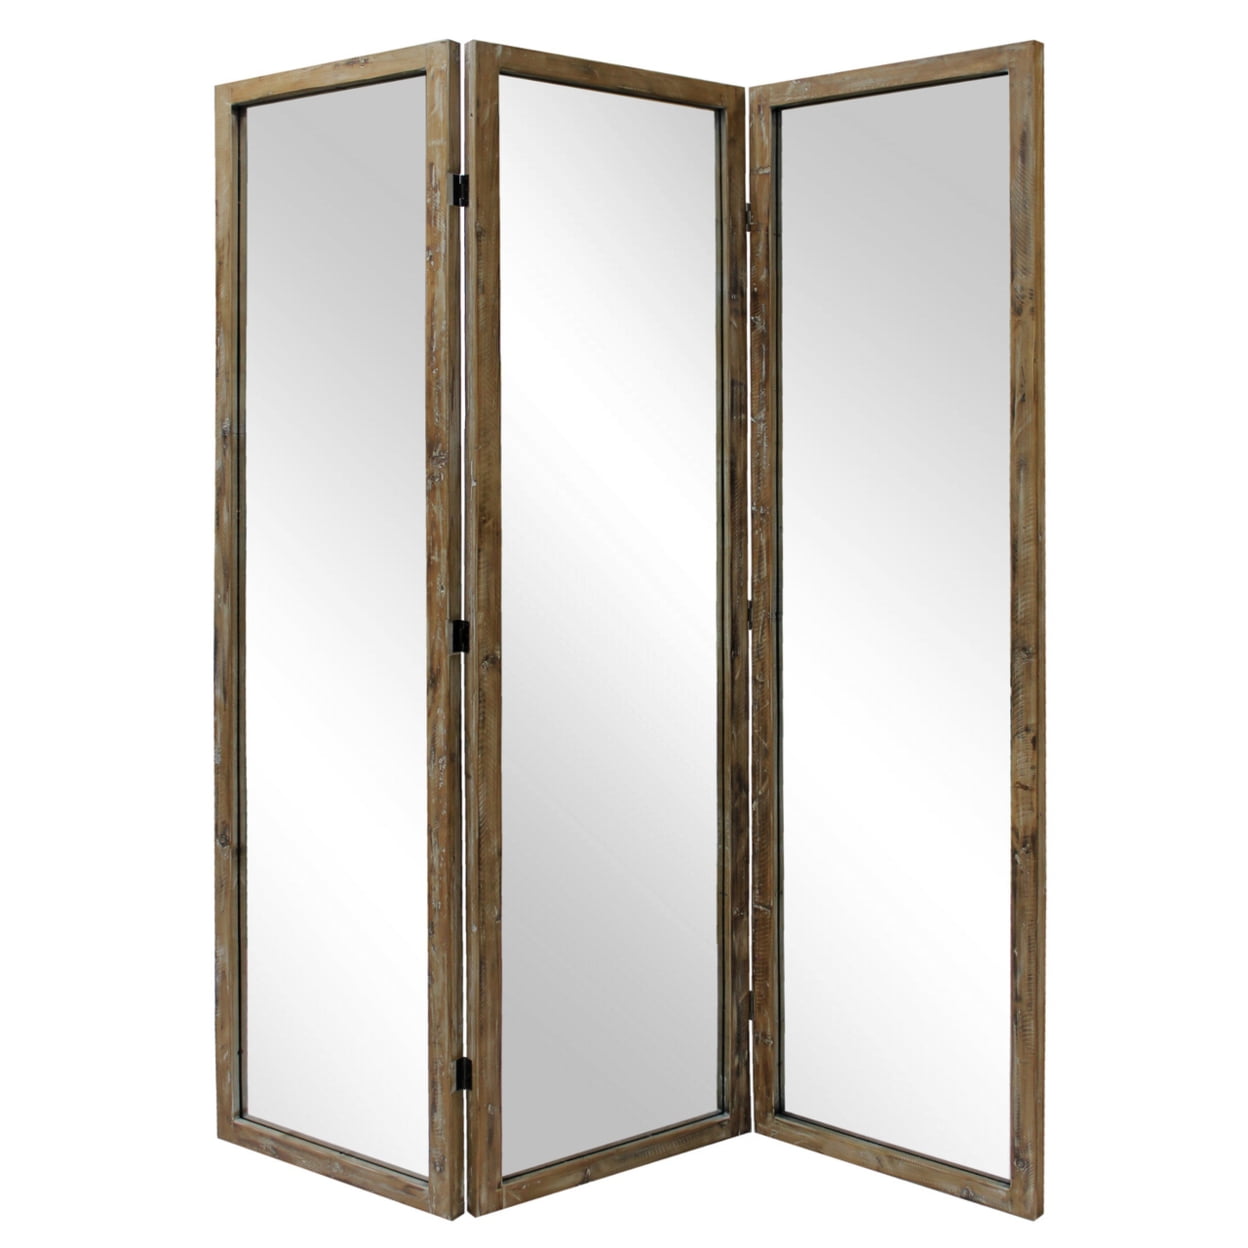 Picture of Benjara BM276717 70 in. 3 Panel Mirror Room Divider - Wood Frame, Distressed Brown